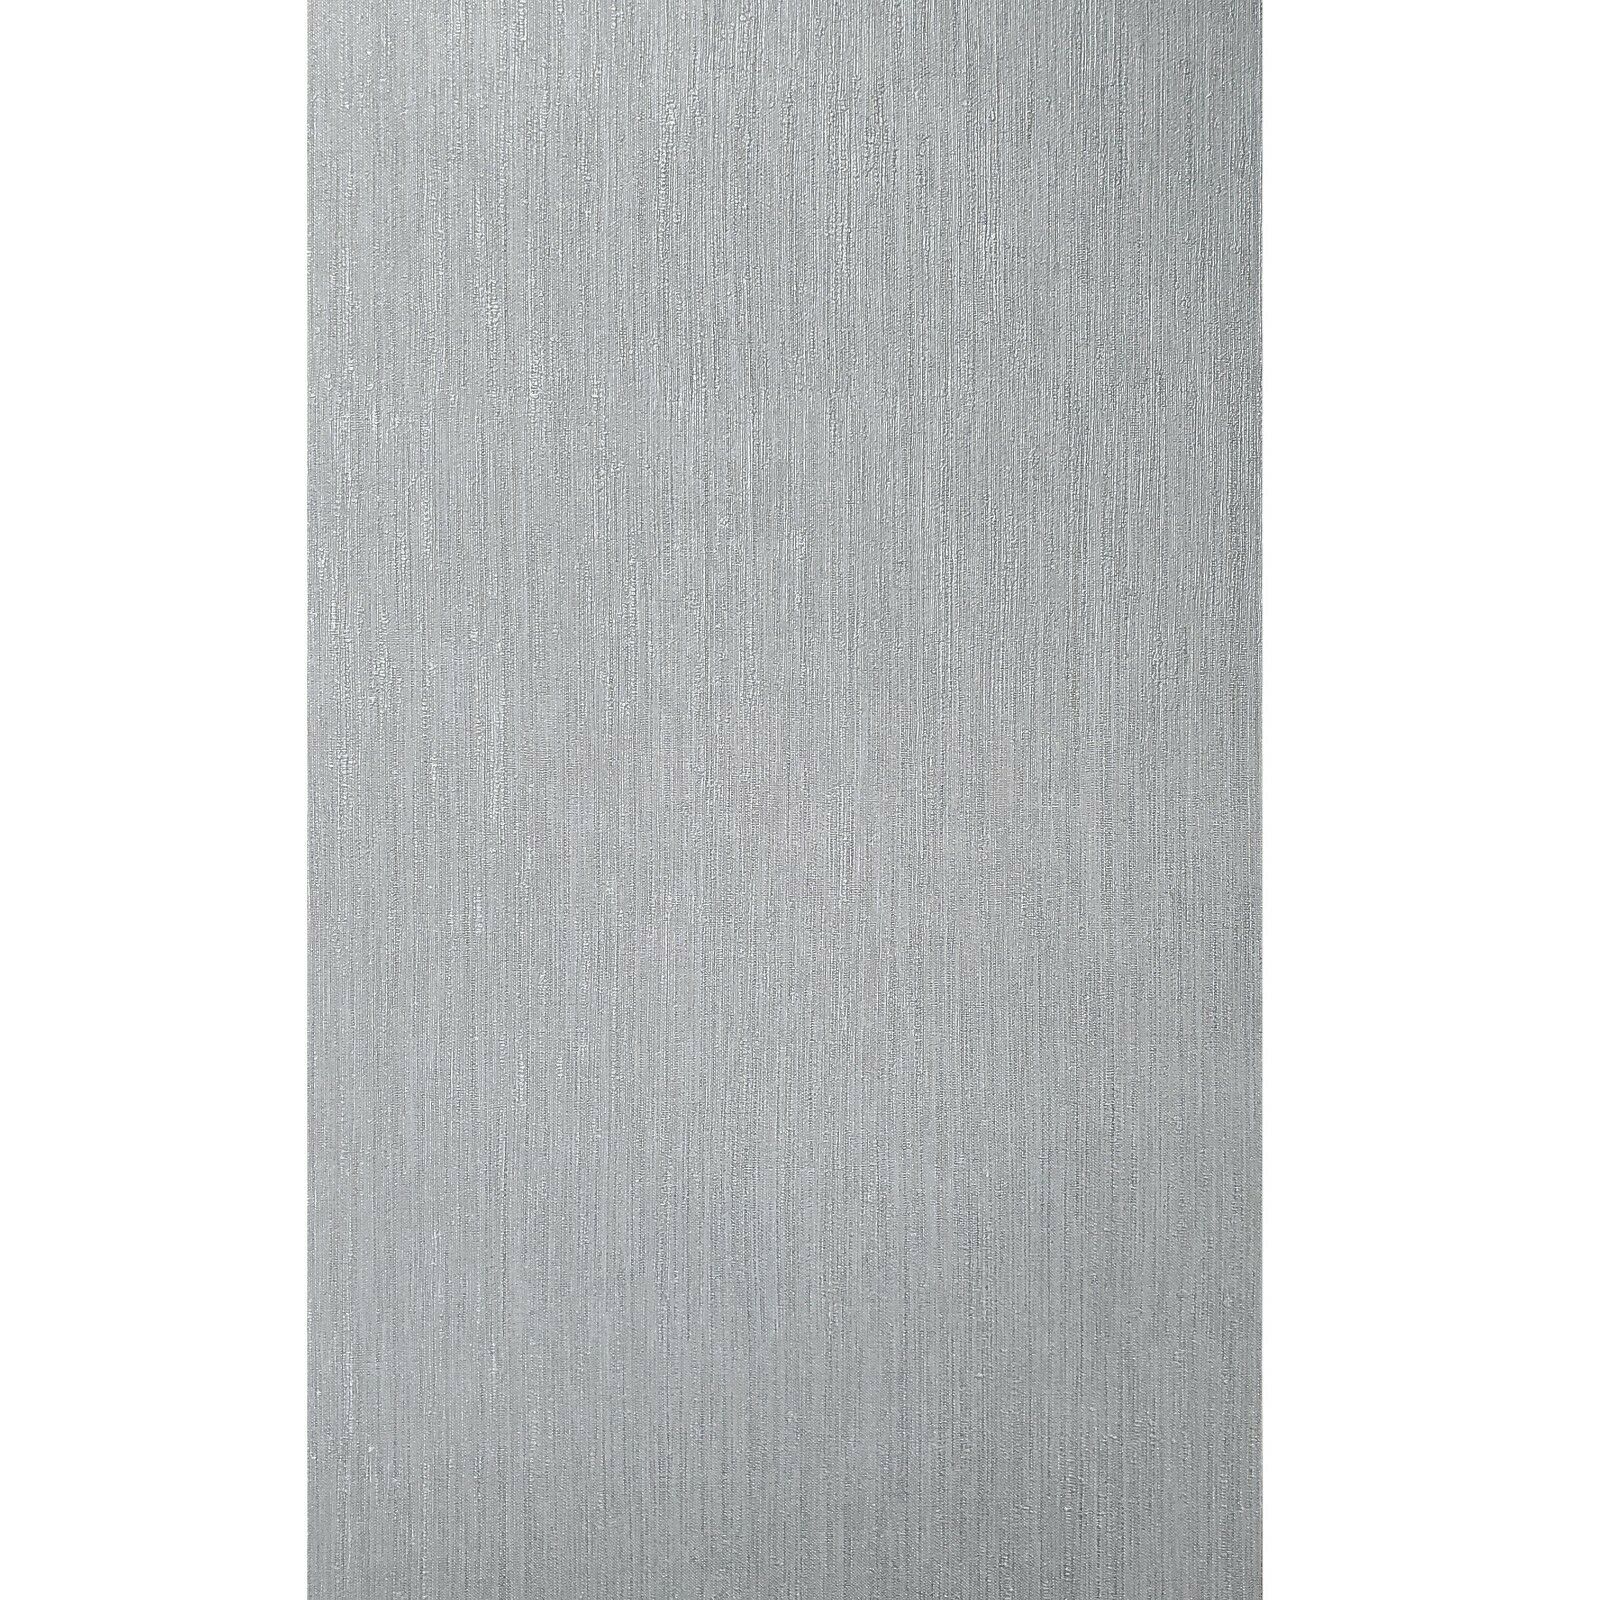 Z63032 Zambaiti Gray silver metallic faux fabric textured stria